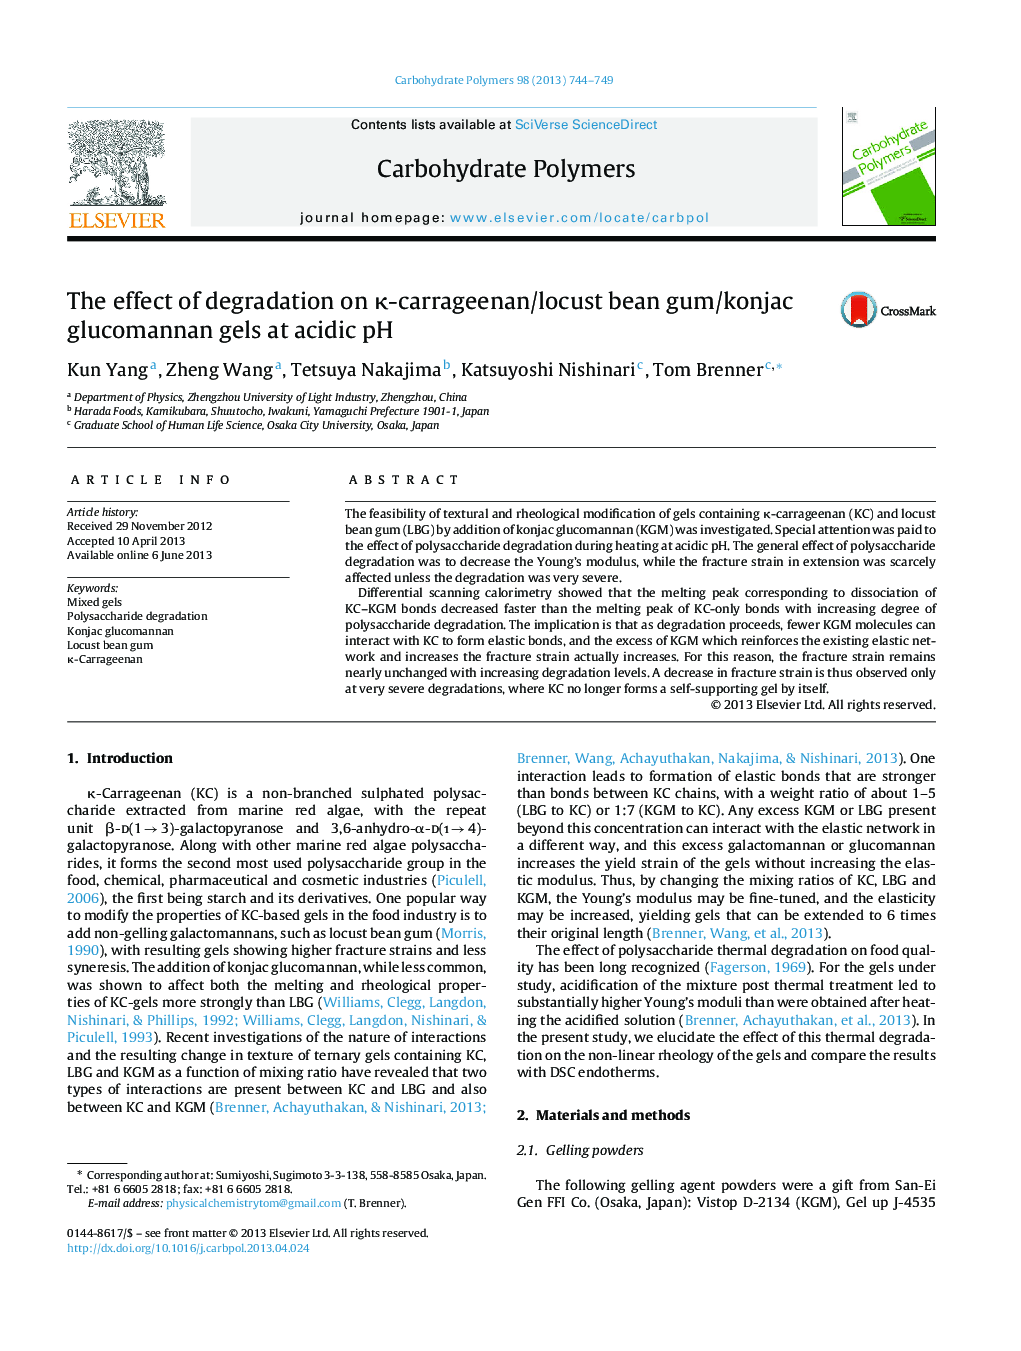 The effect of degradation on Îº-carrageenan/locust bean gum/konjac glucomannan gels at acidic pH